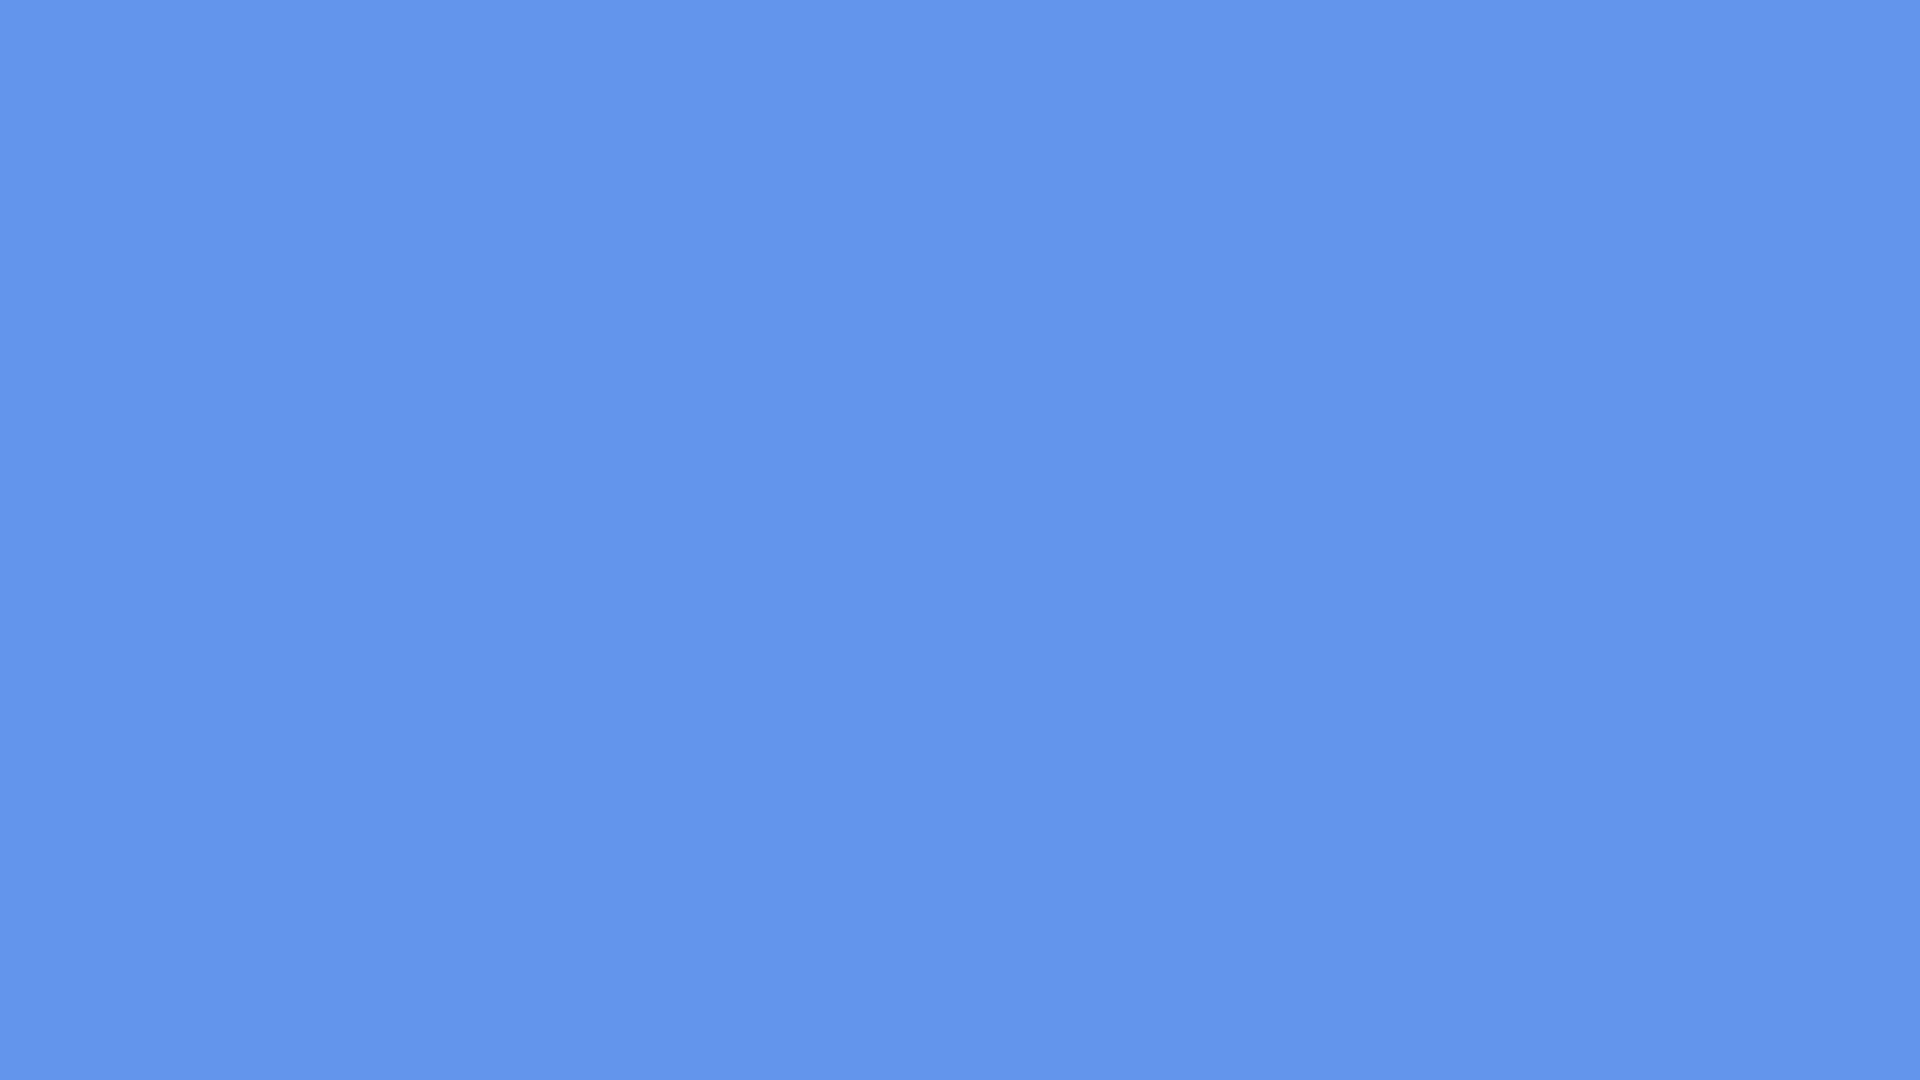 1920x1080 Cornflower Blue Solid Color Background